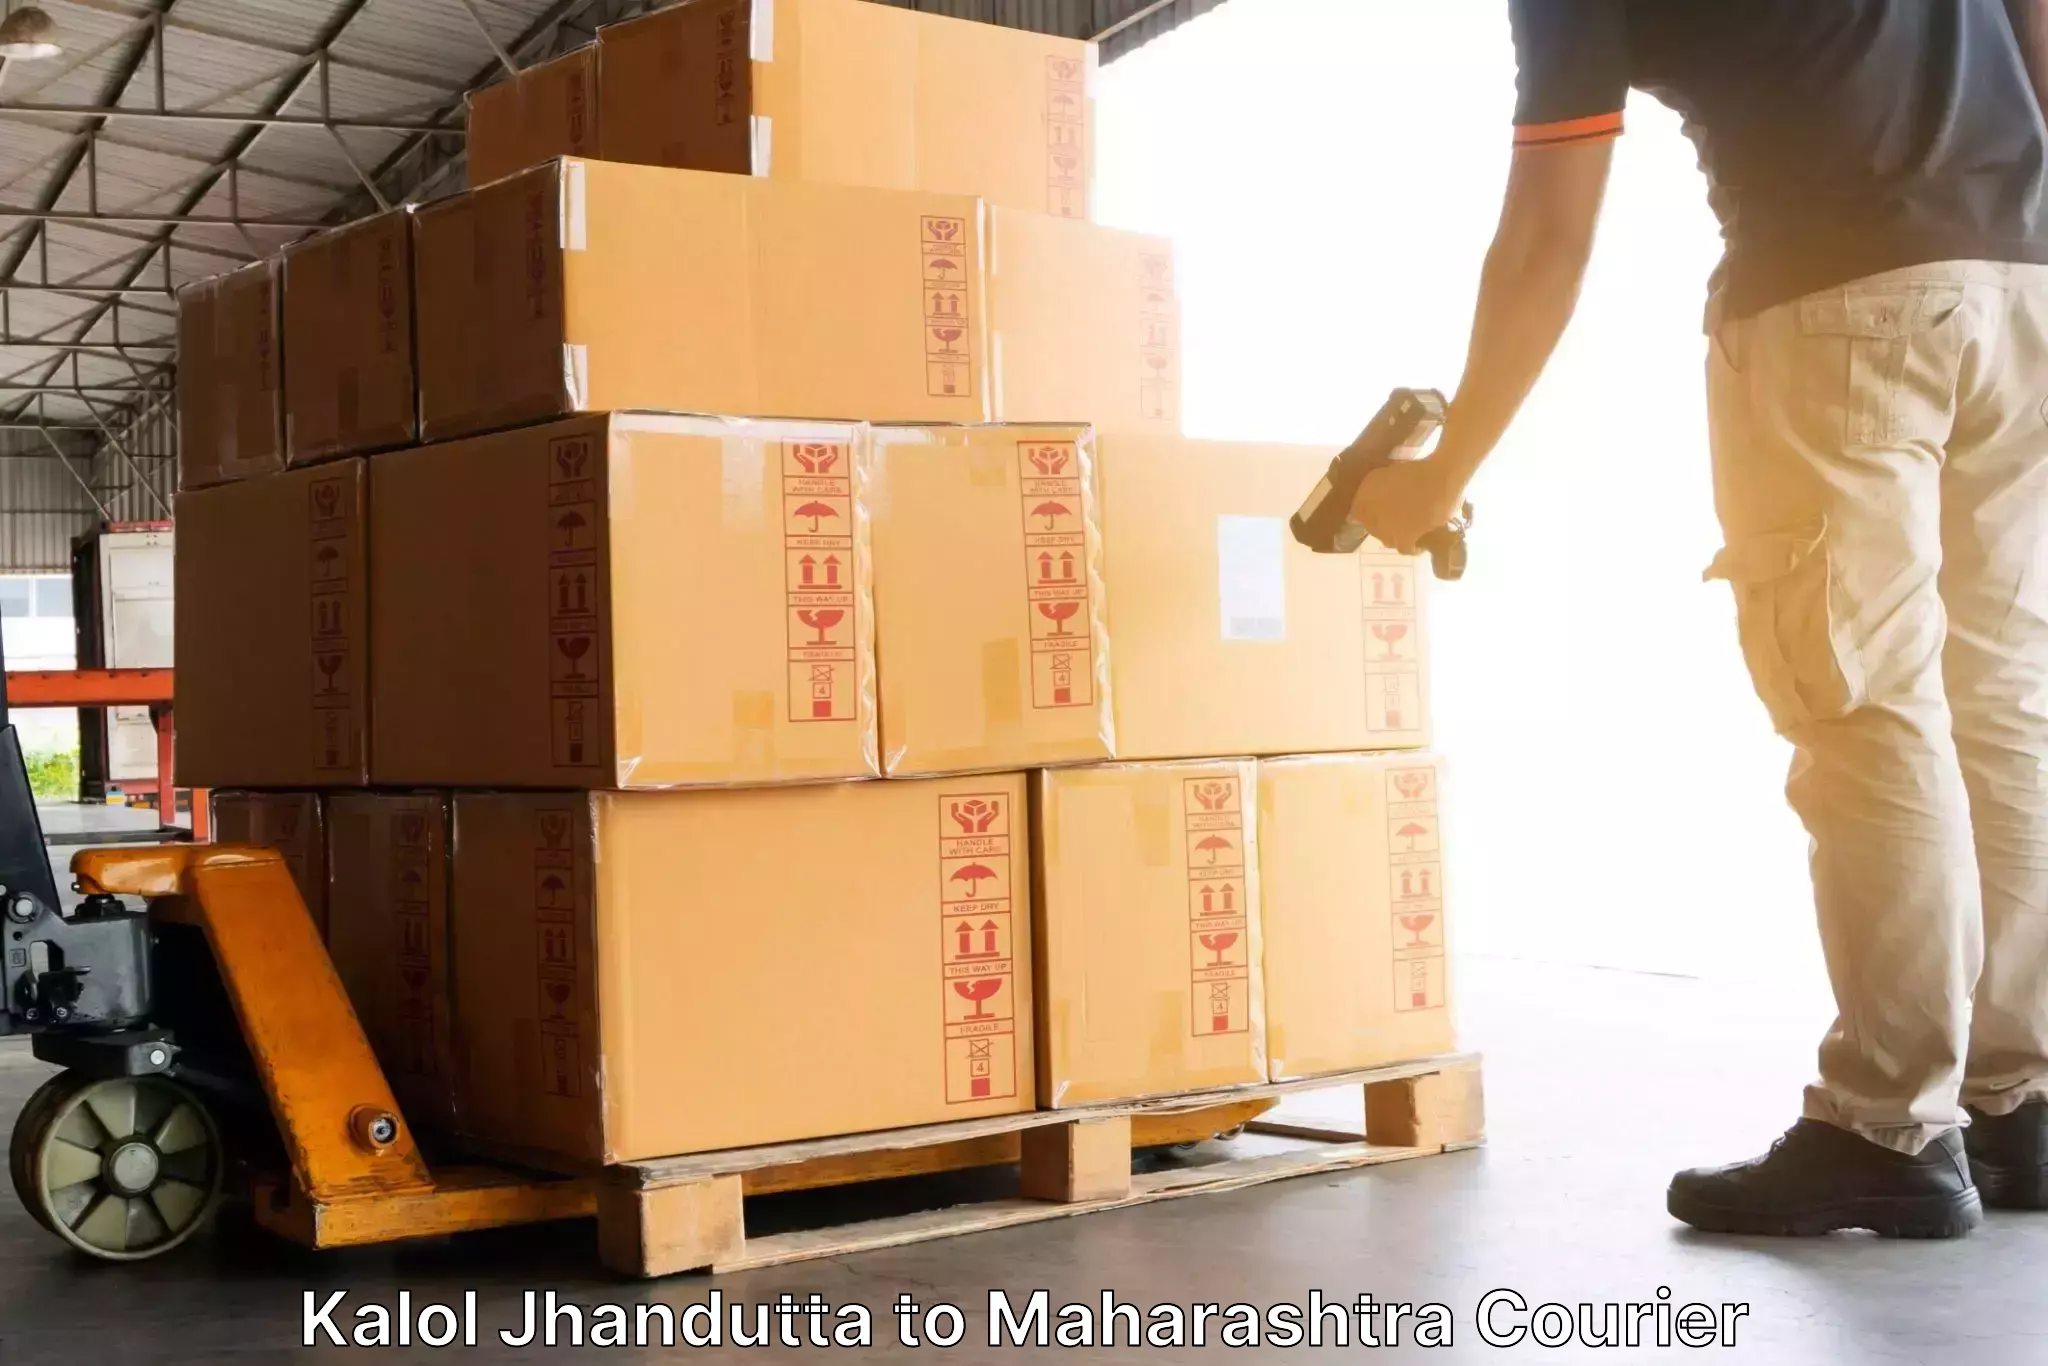 Global shipping networks Kalol Jhandutta to Shirur Anantpal